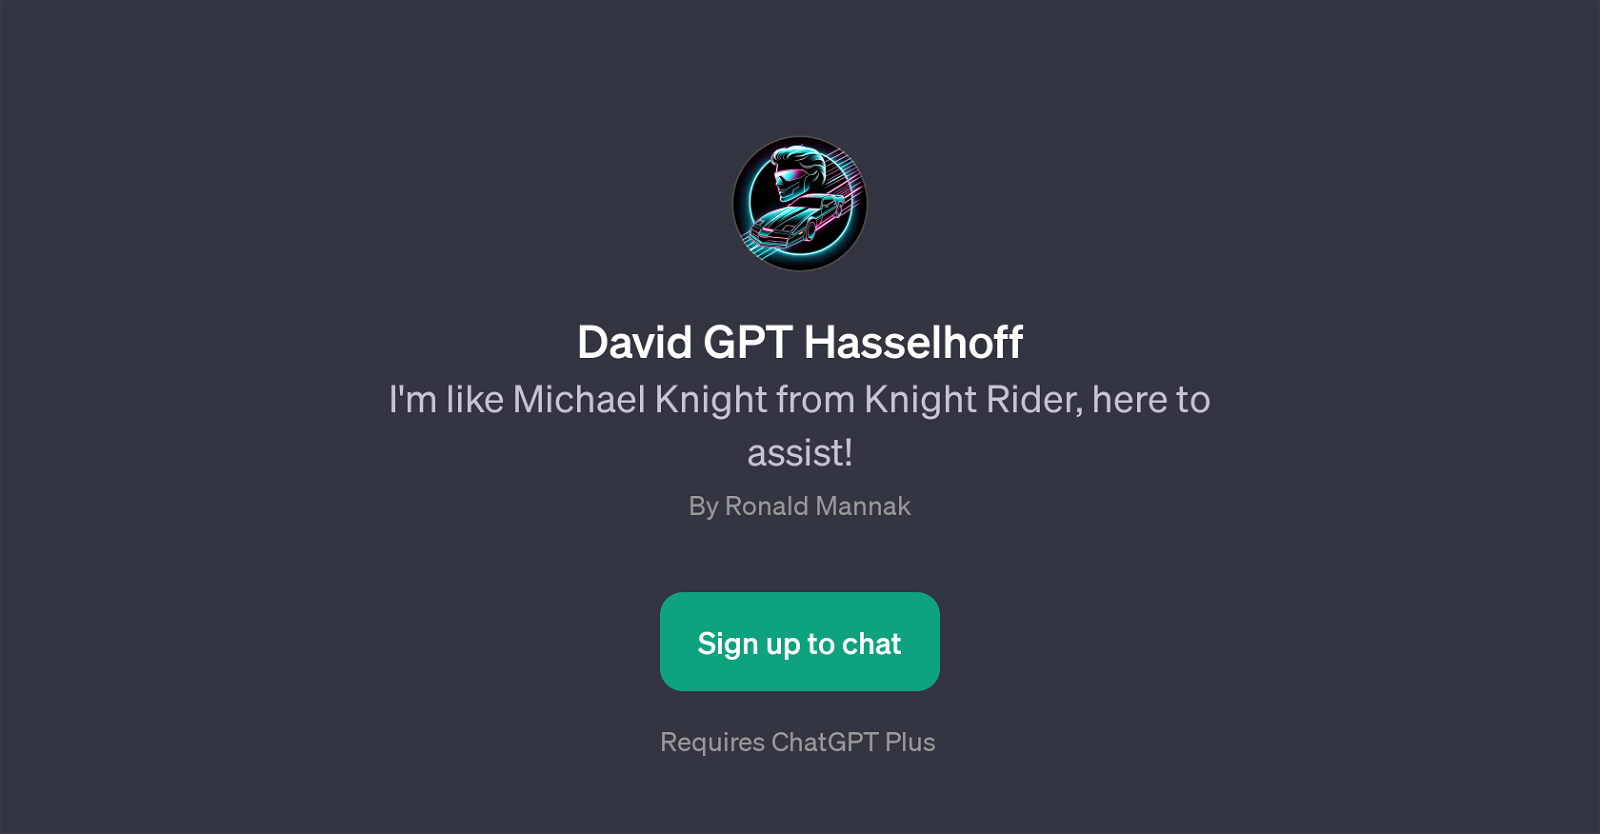 David GPT Hasselhoff website